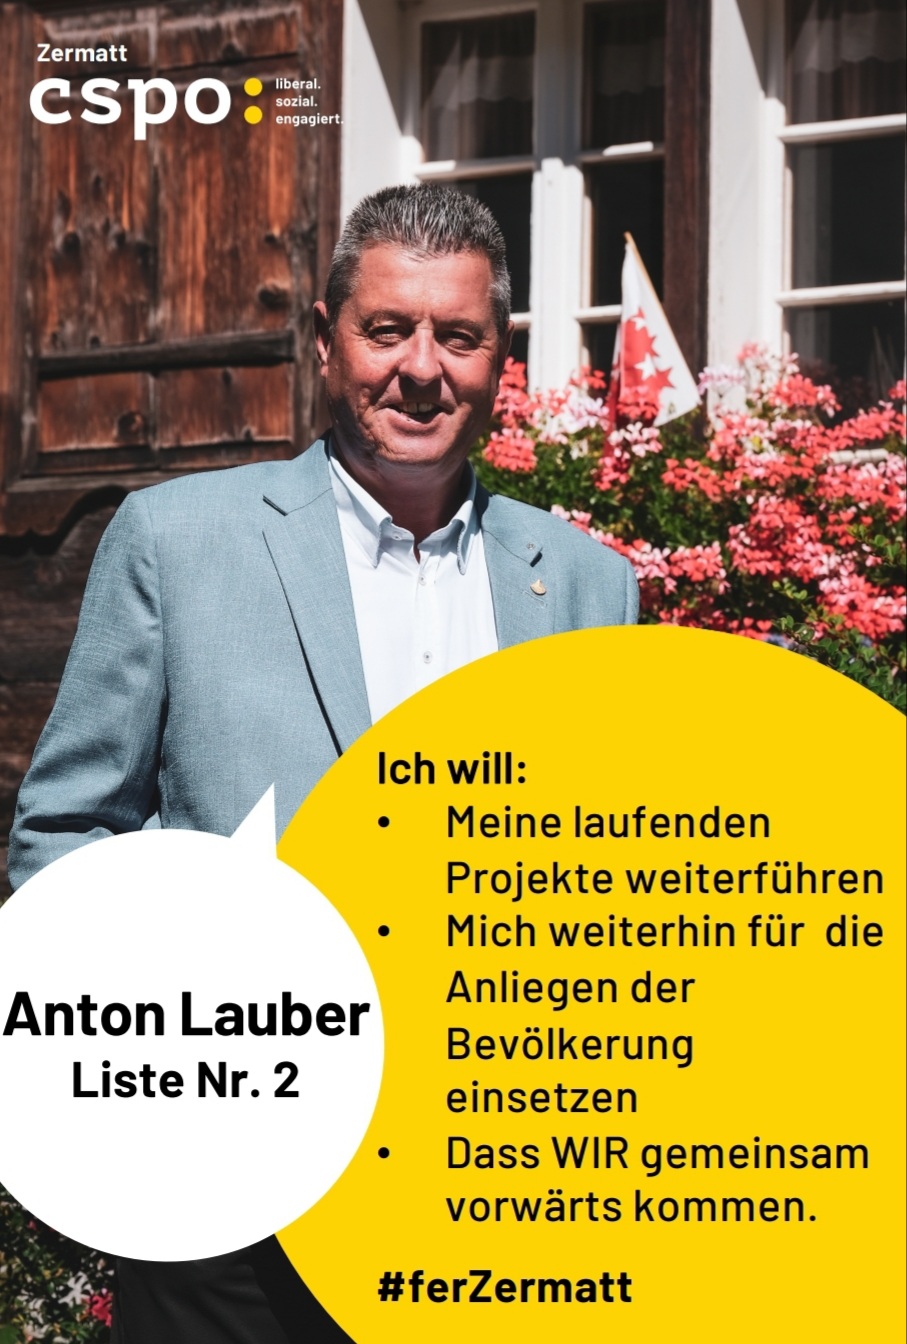 Liste Nr. 2 - Anton Lauber